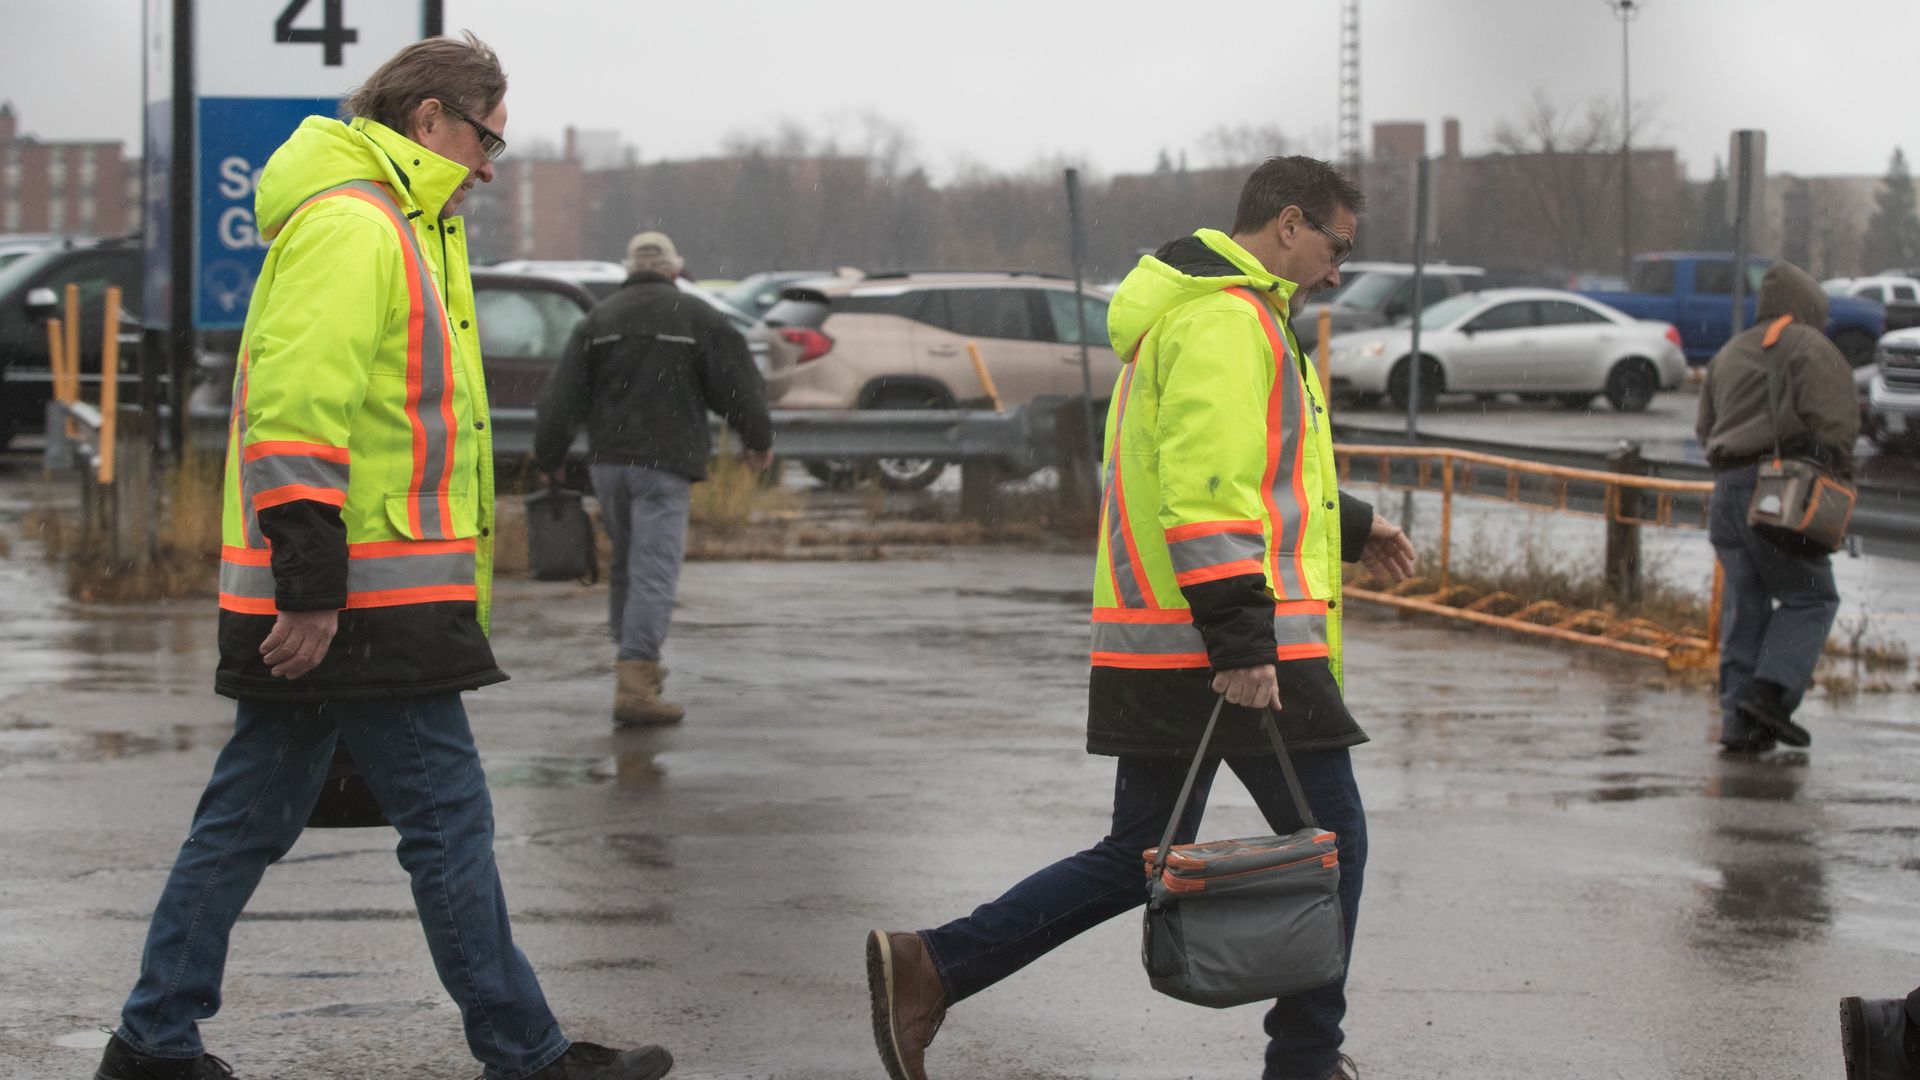 General Motors workers leave the Oshawa General Motors plant in Oshawa, Ontario, on November 26, 2018